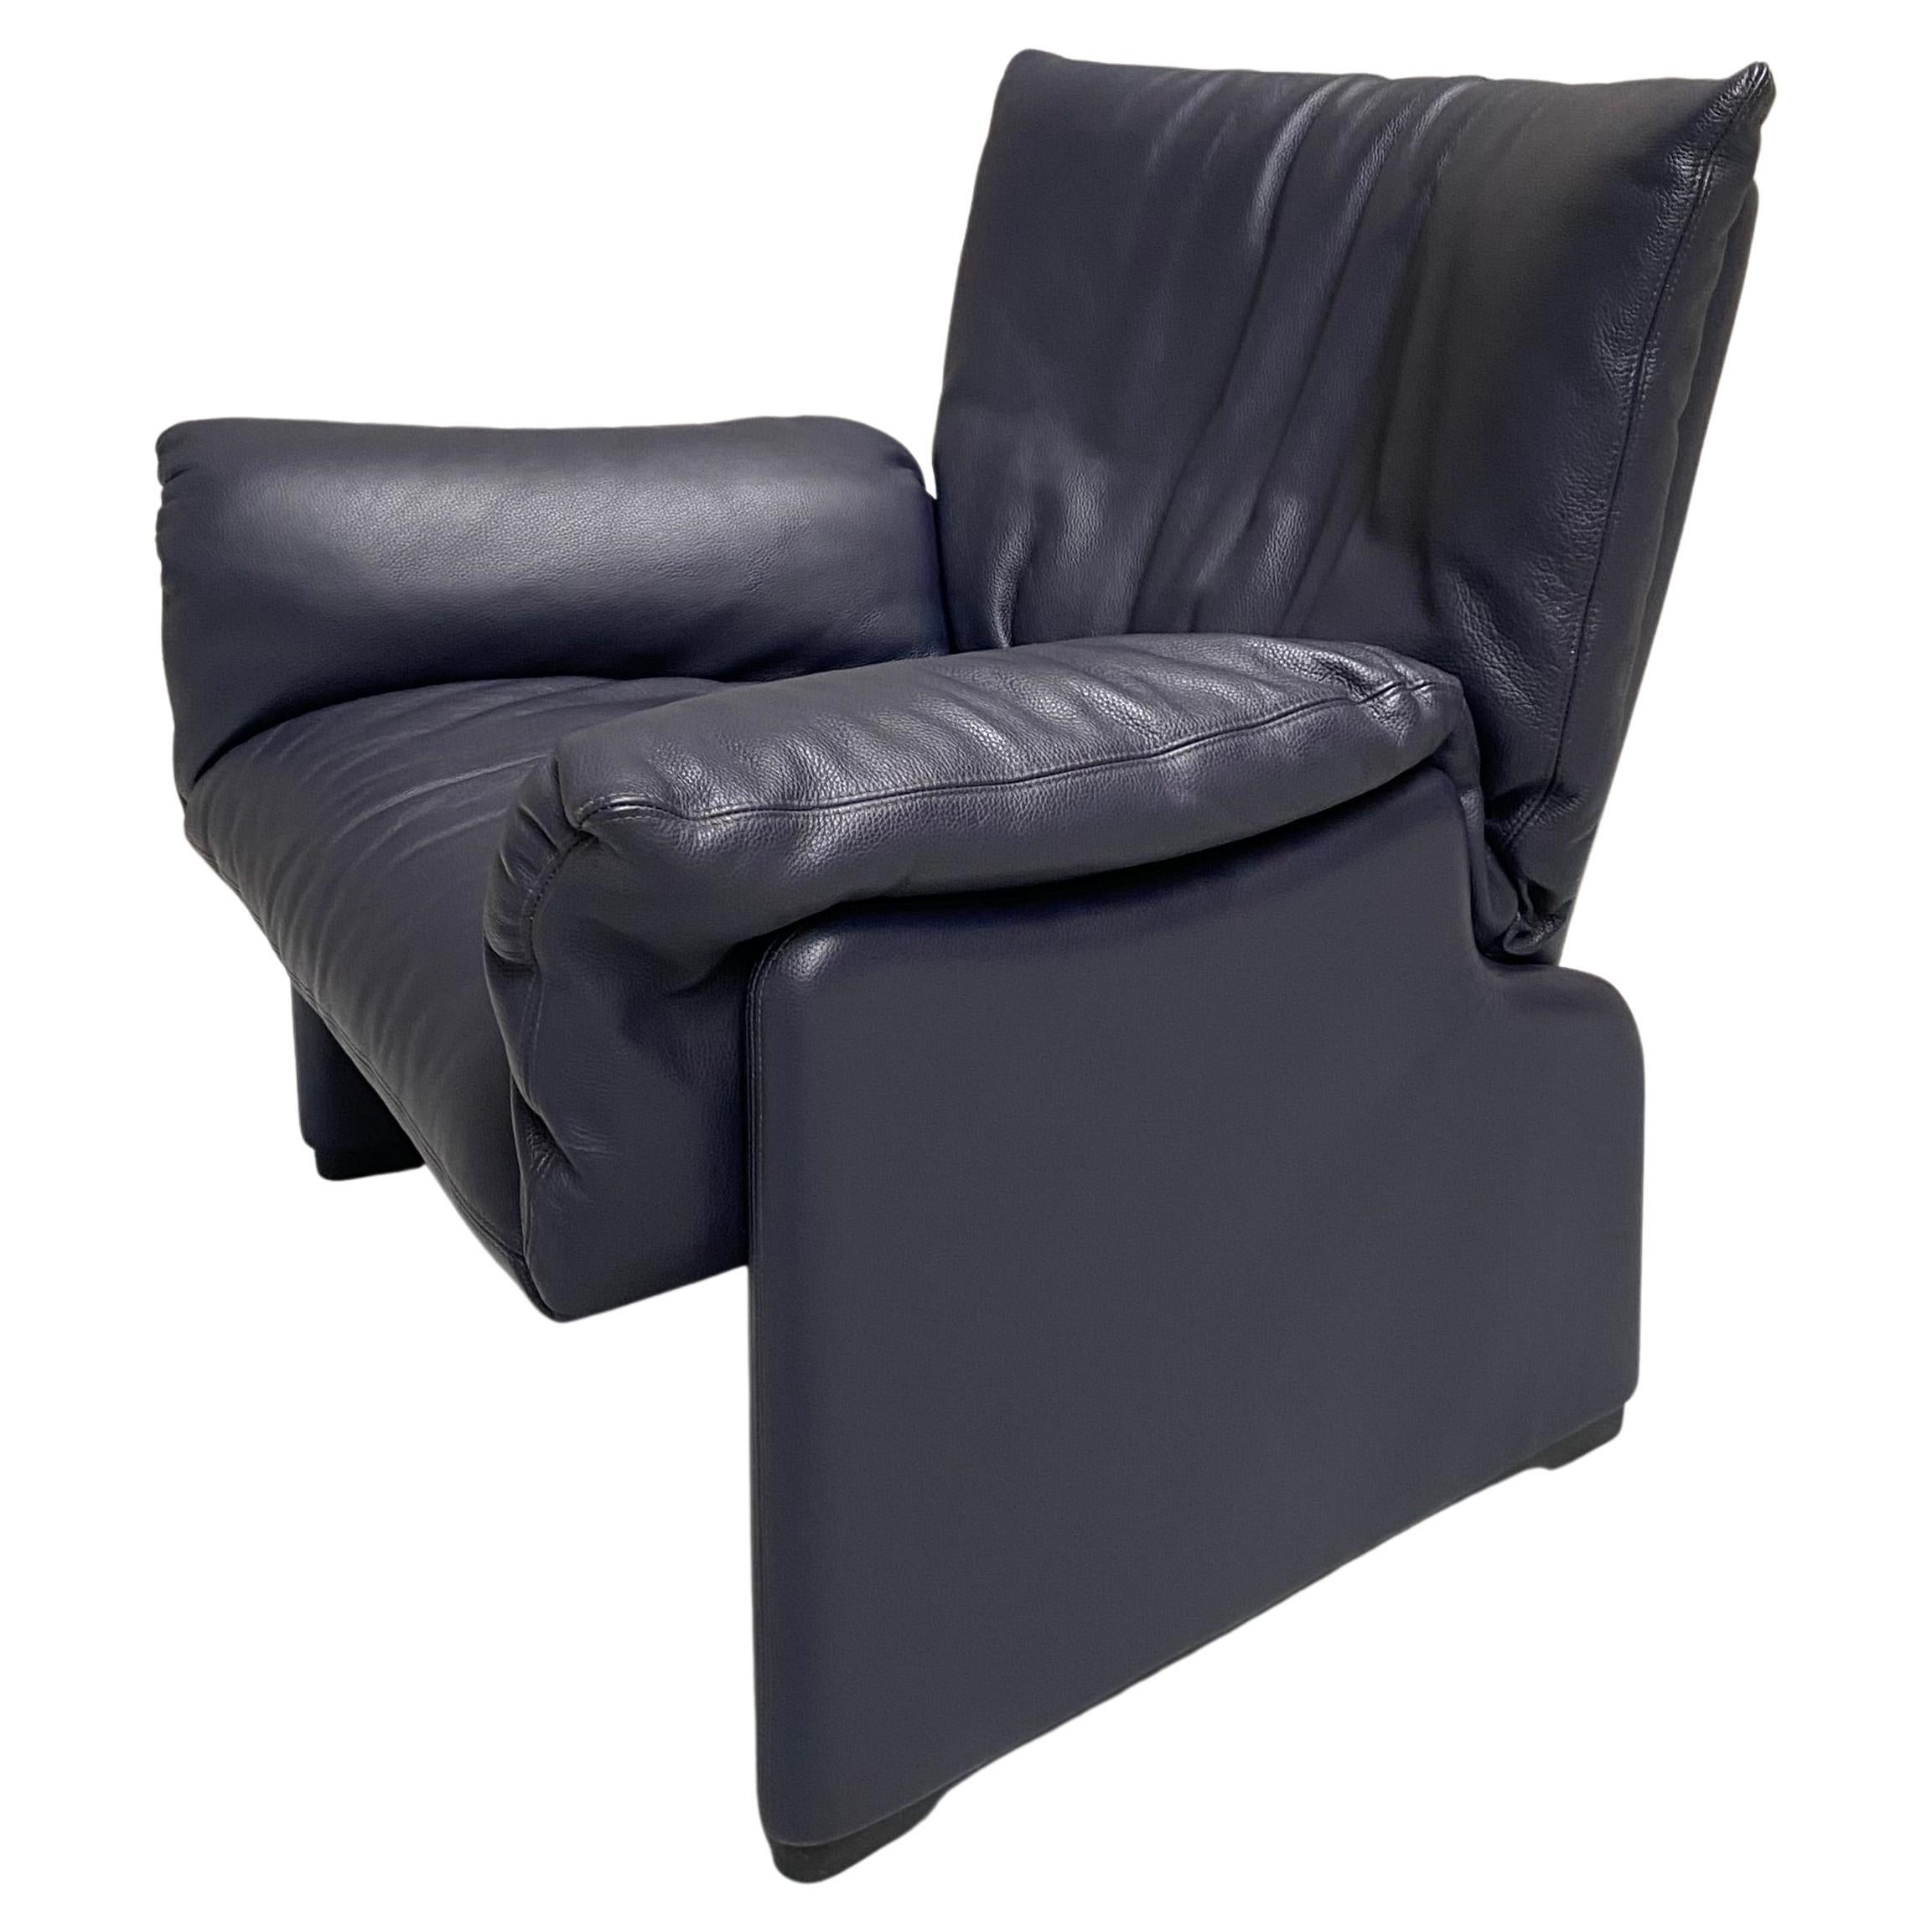 Palmaria Chair - 2 For Sale on 1stDibs